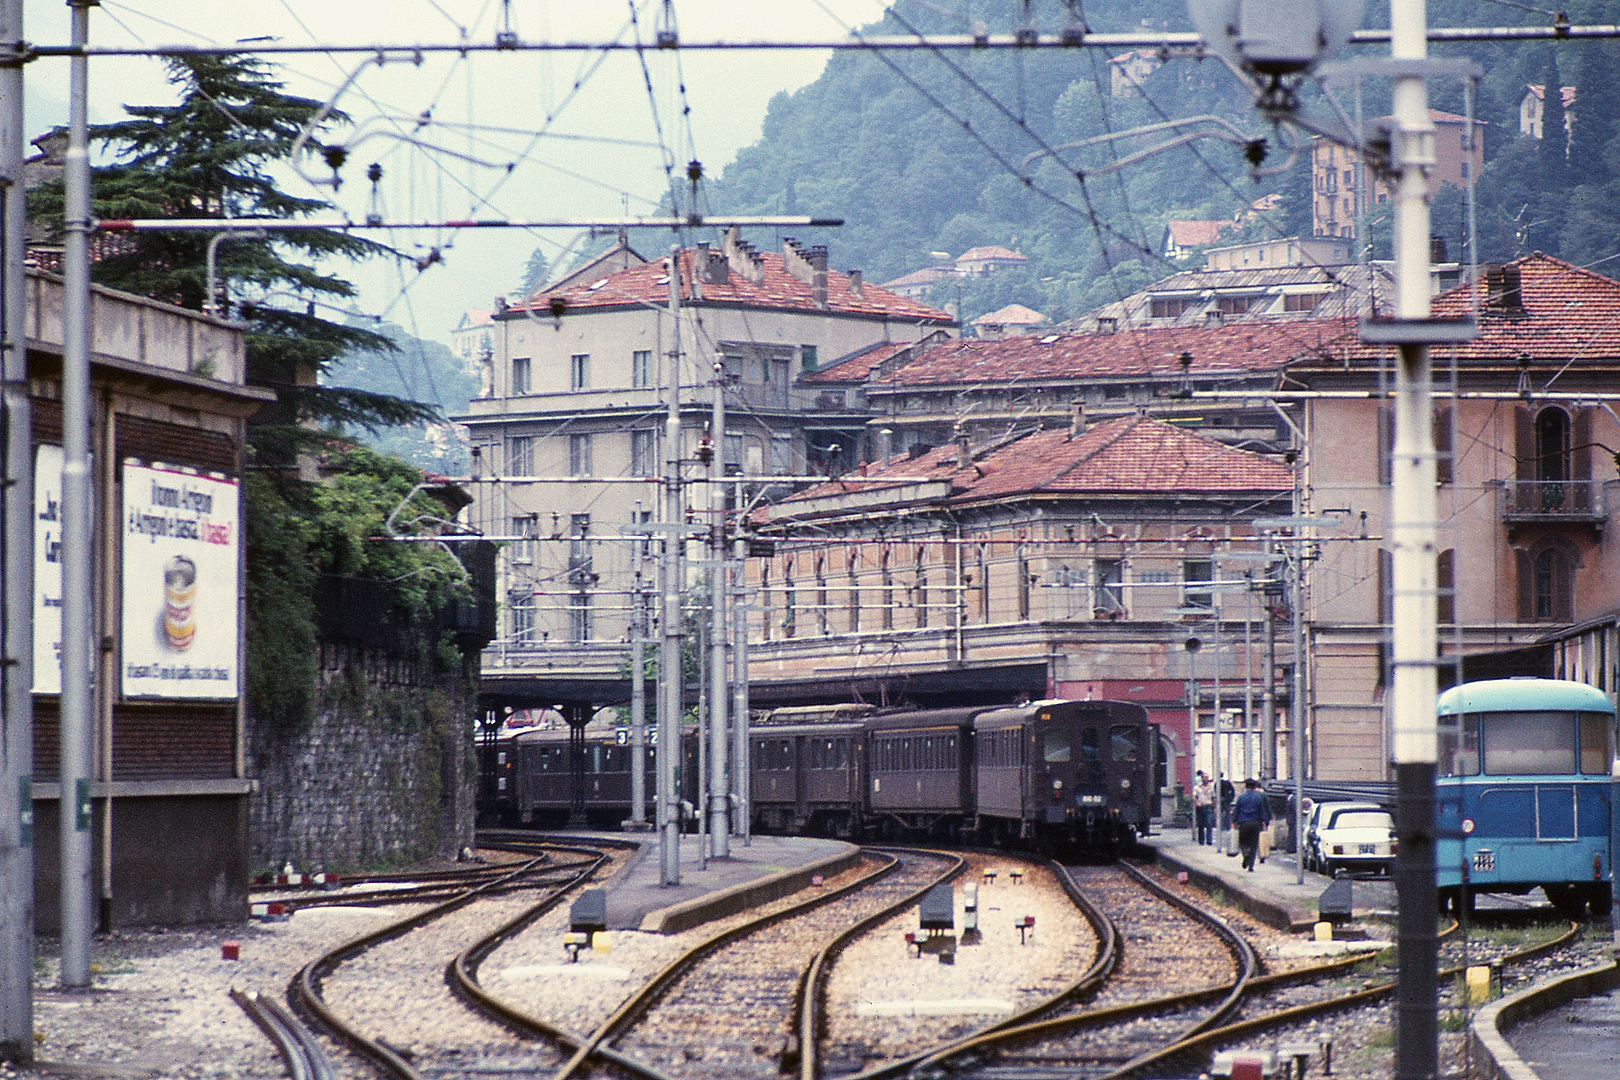 Station Como; Como railway station, Lombardy. Italy